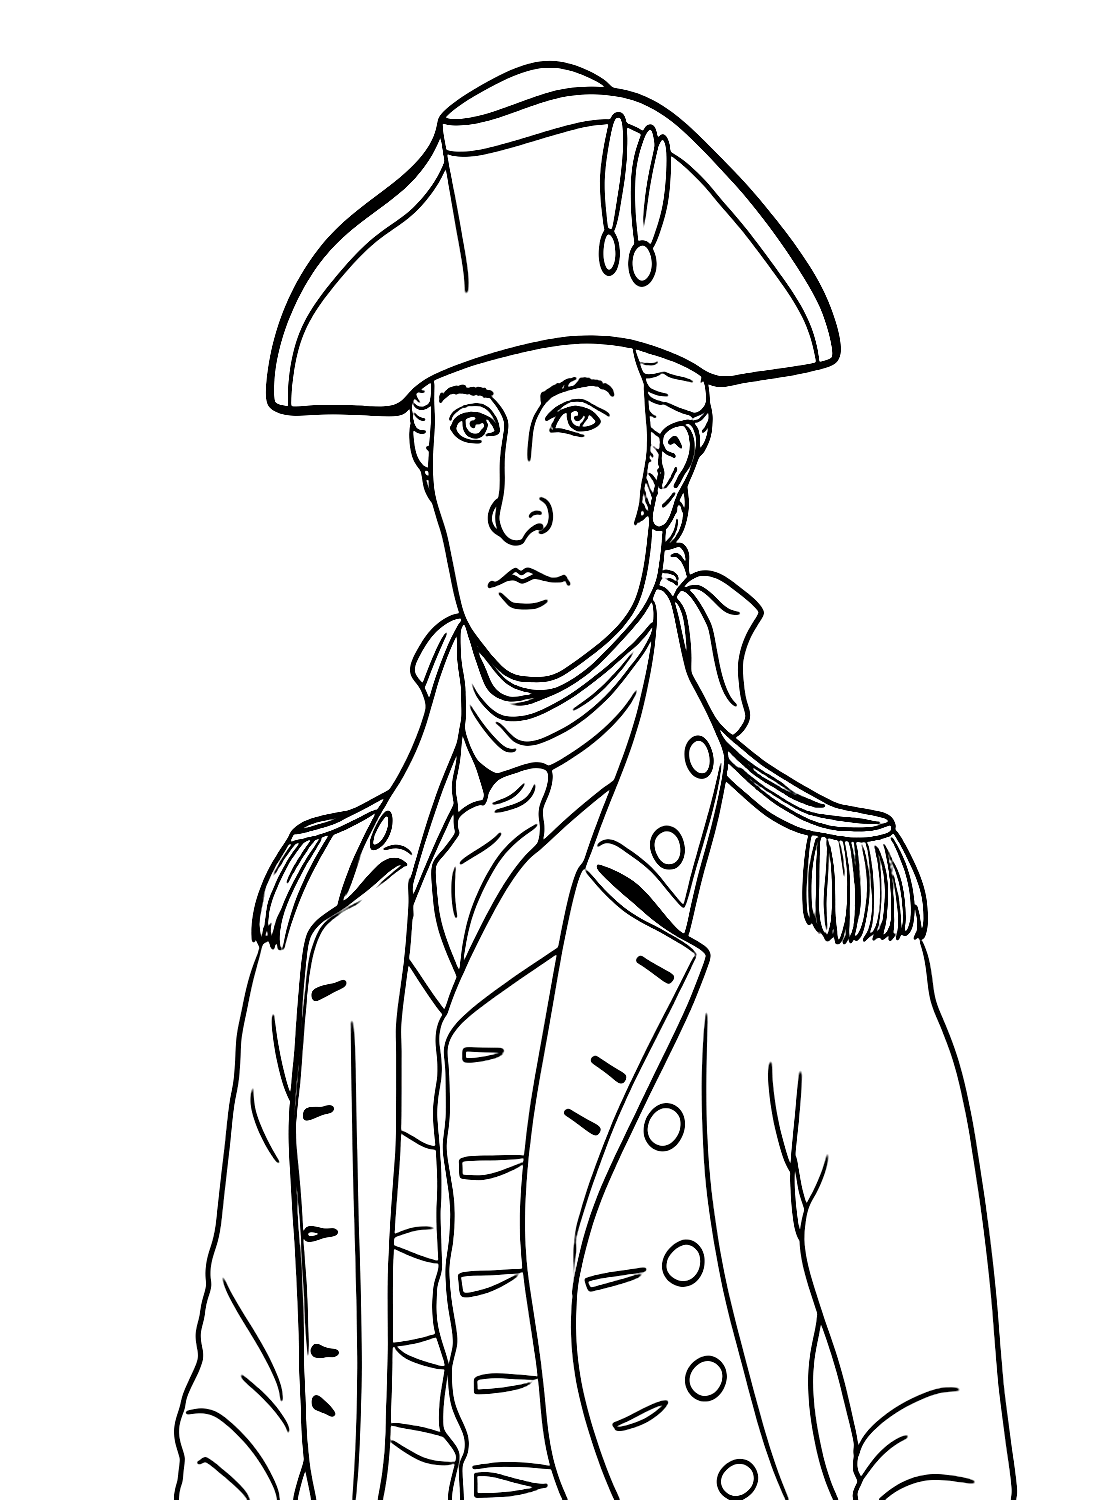 Hamilton in Military Uniform Coloring Page